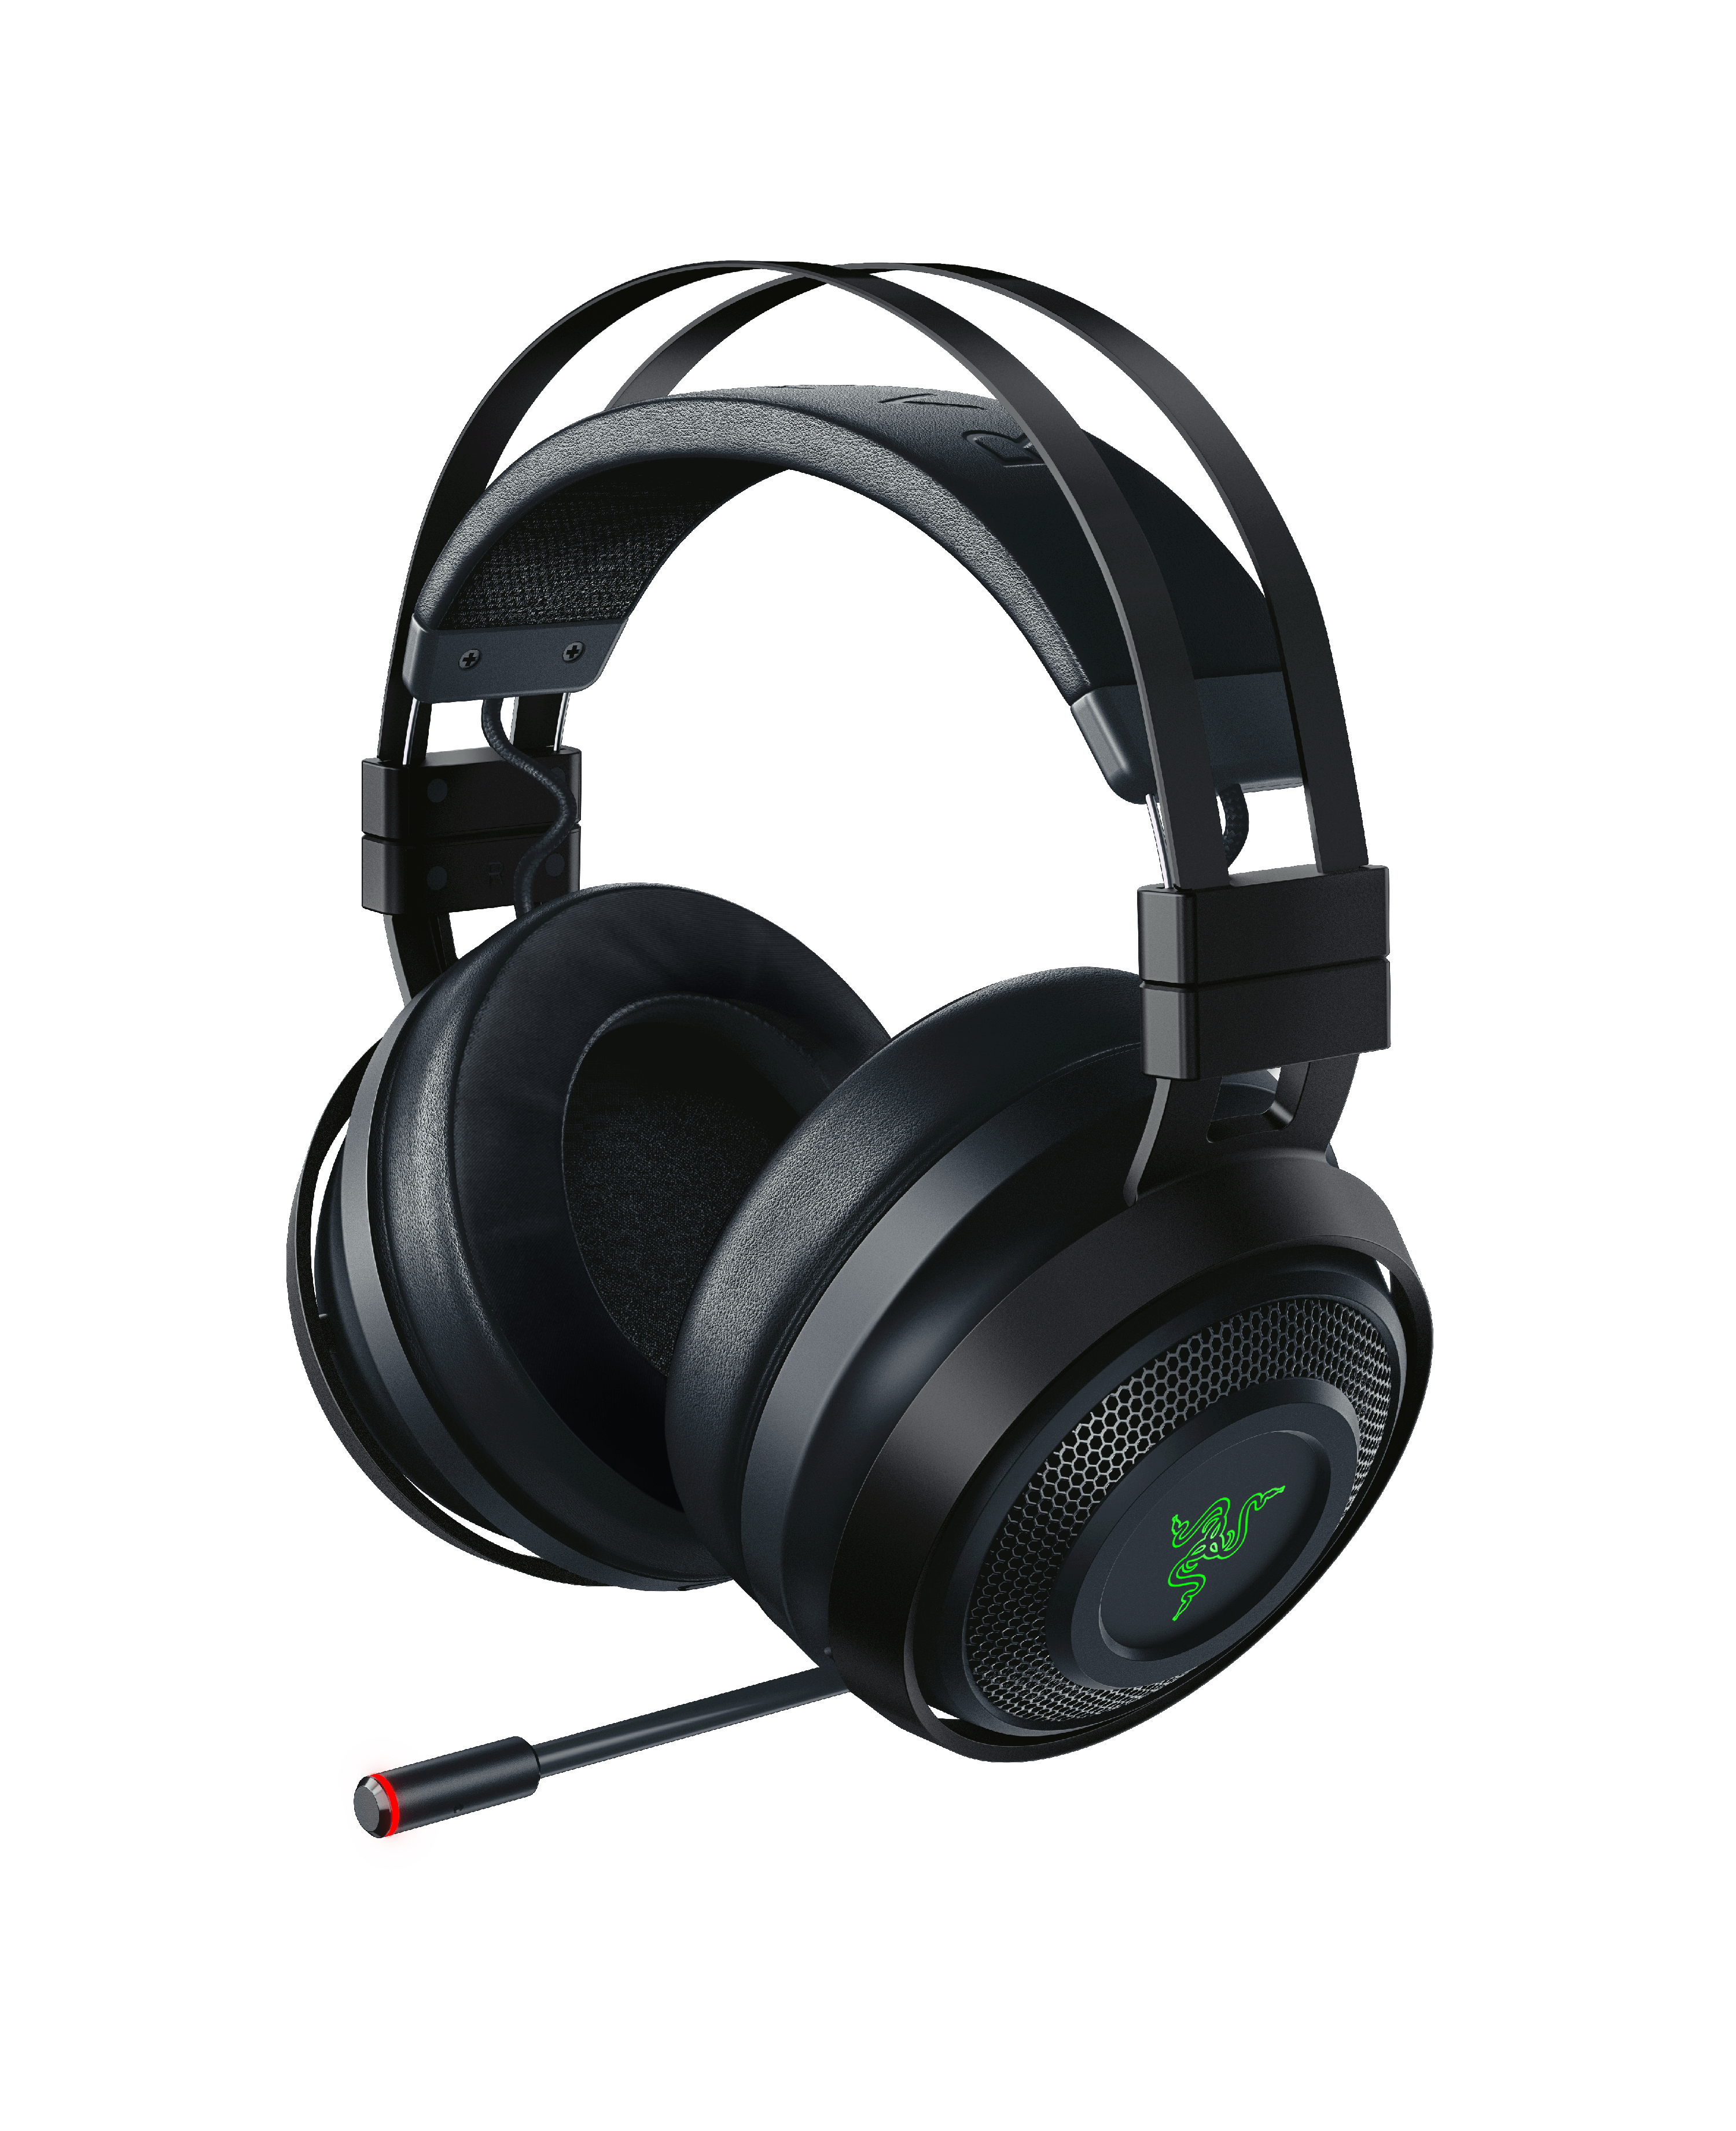 Razer Nari Ultimate Wireless 7.1 Surround Sound Gaming Headset: THX Audio & Haptic Feedback - Auto-Adjust Headband - Chroma RGB - Retractable Mic - For PC, PS4, PS5 - Black - image 1 of 6